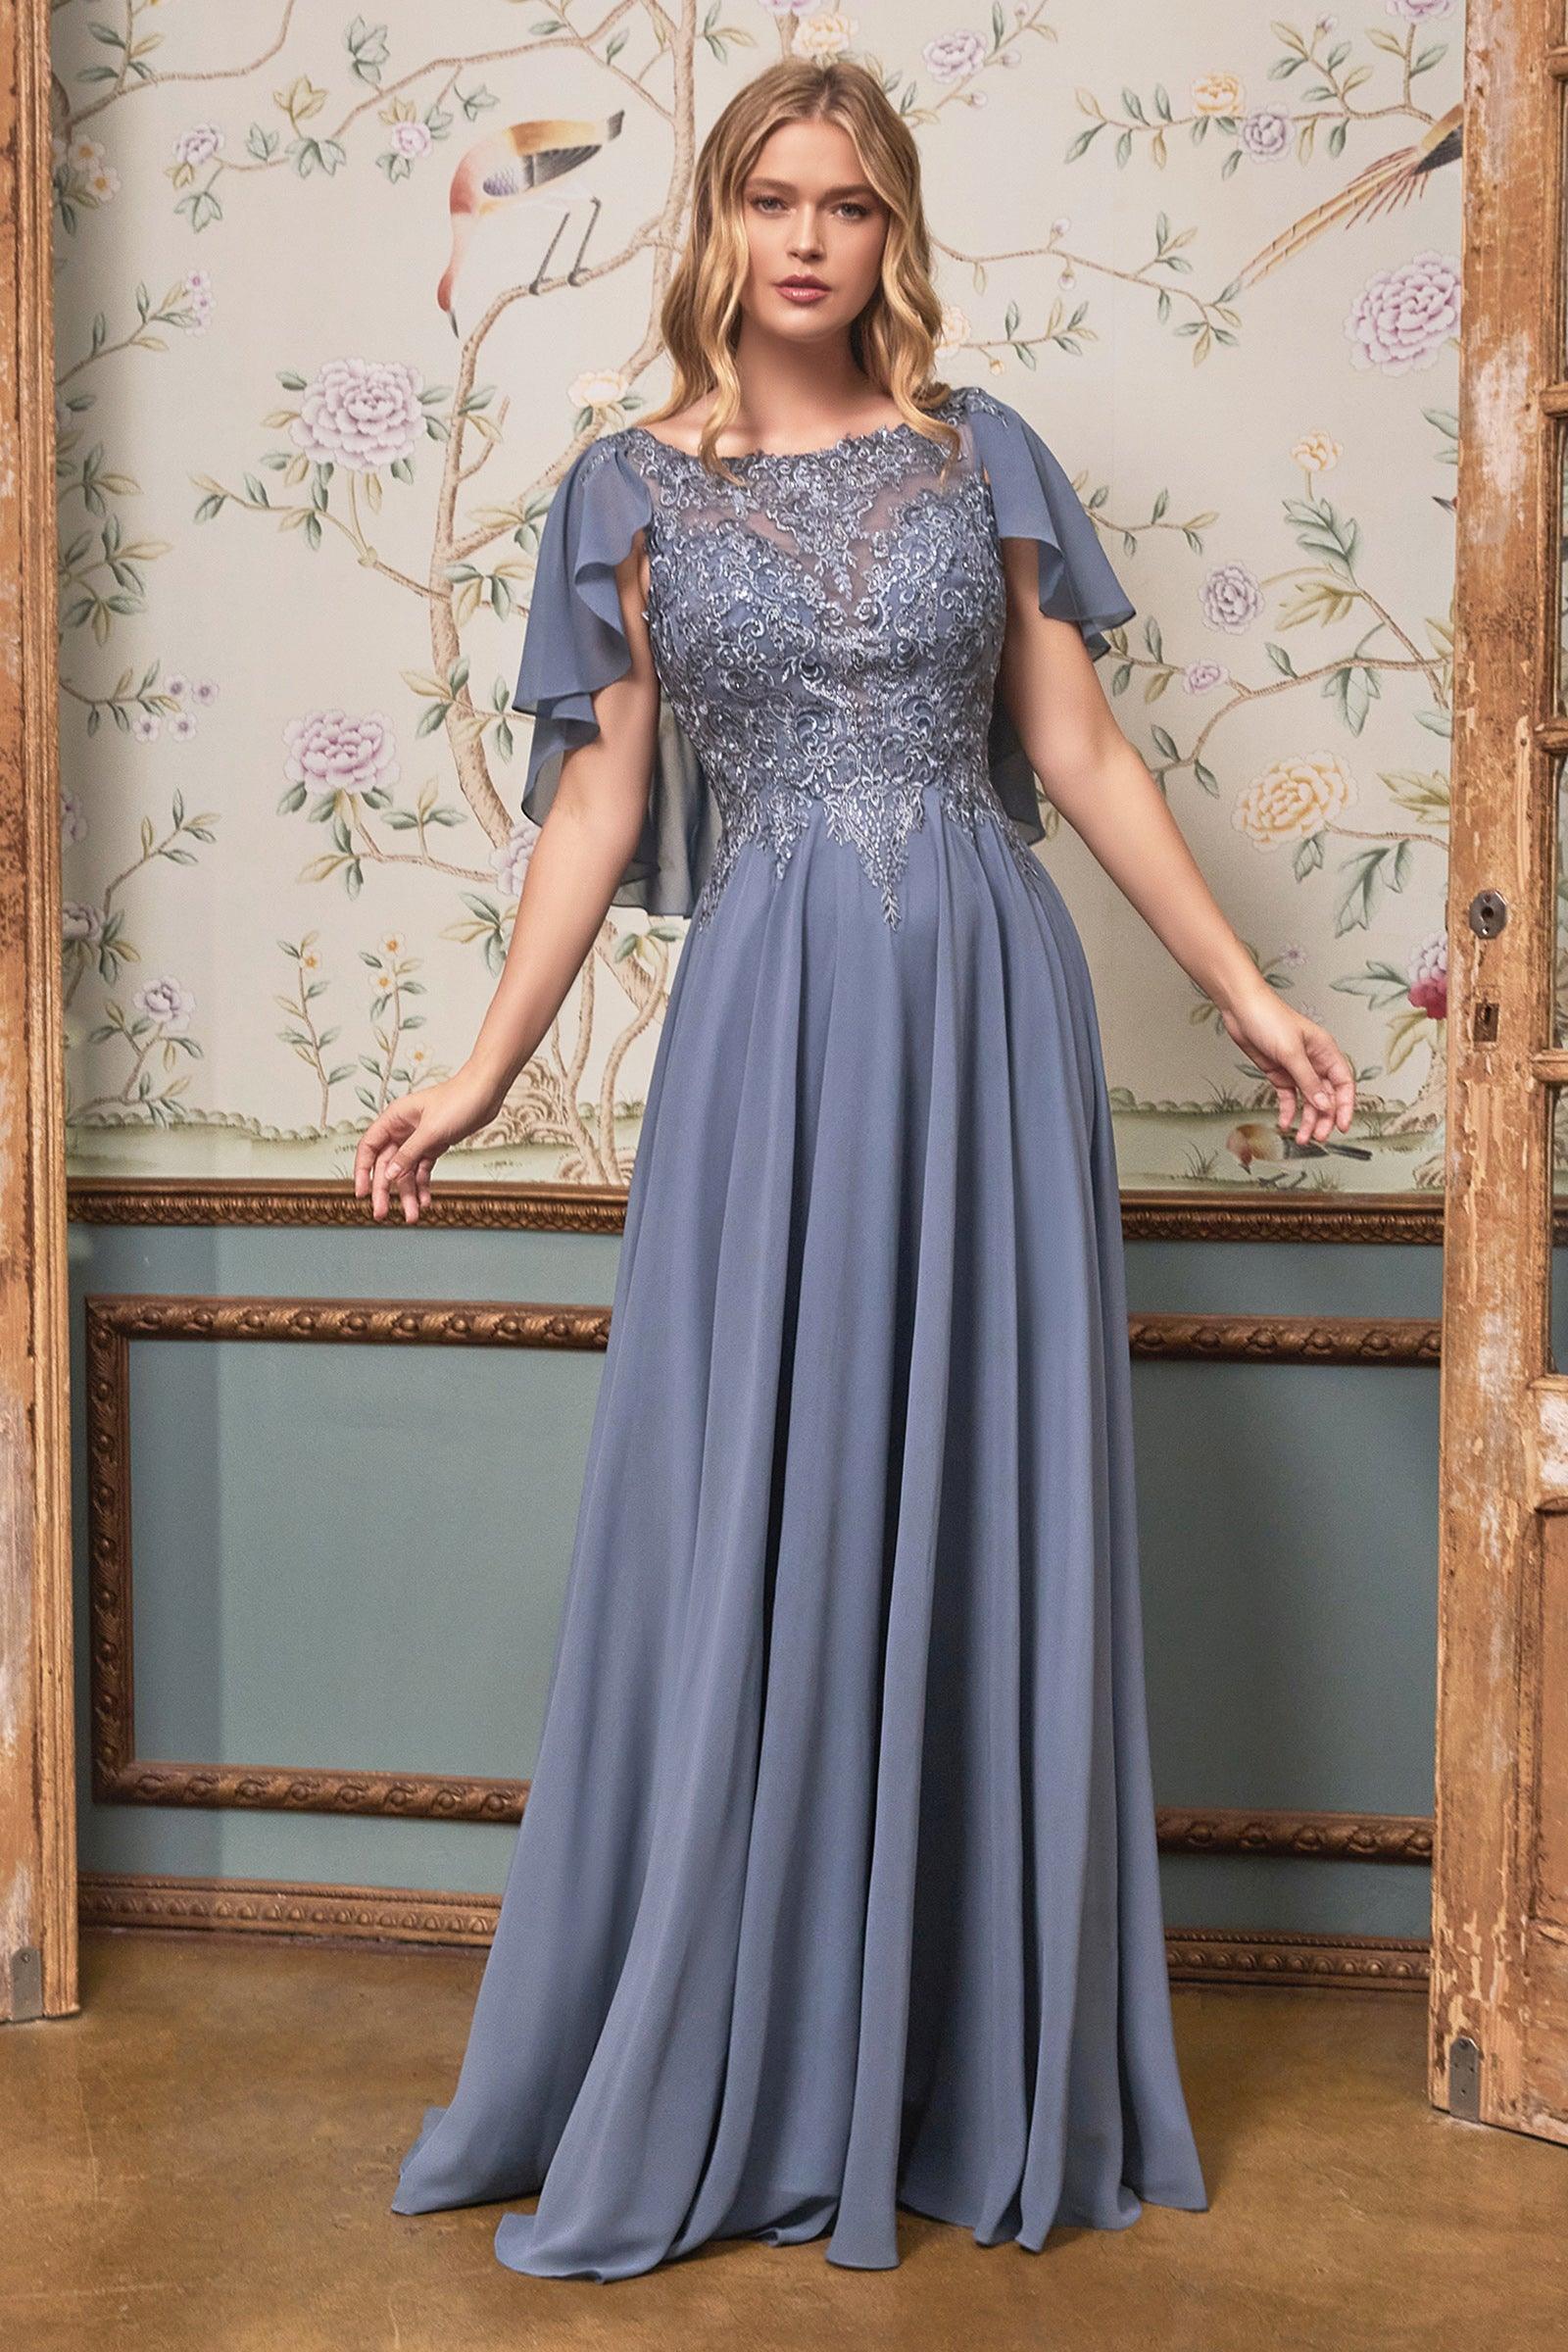 Blushing Floral Gown | Liylah | Modest Gown Rental 14 / Blush / 12 Day Rental